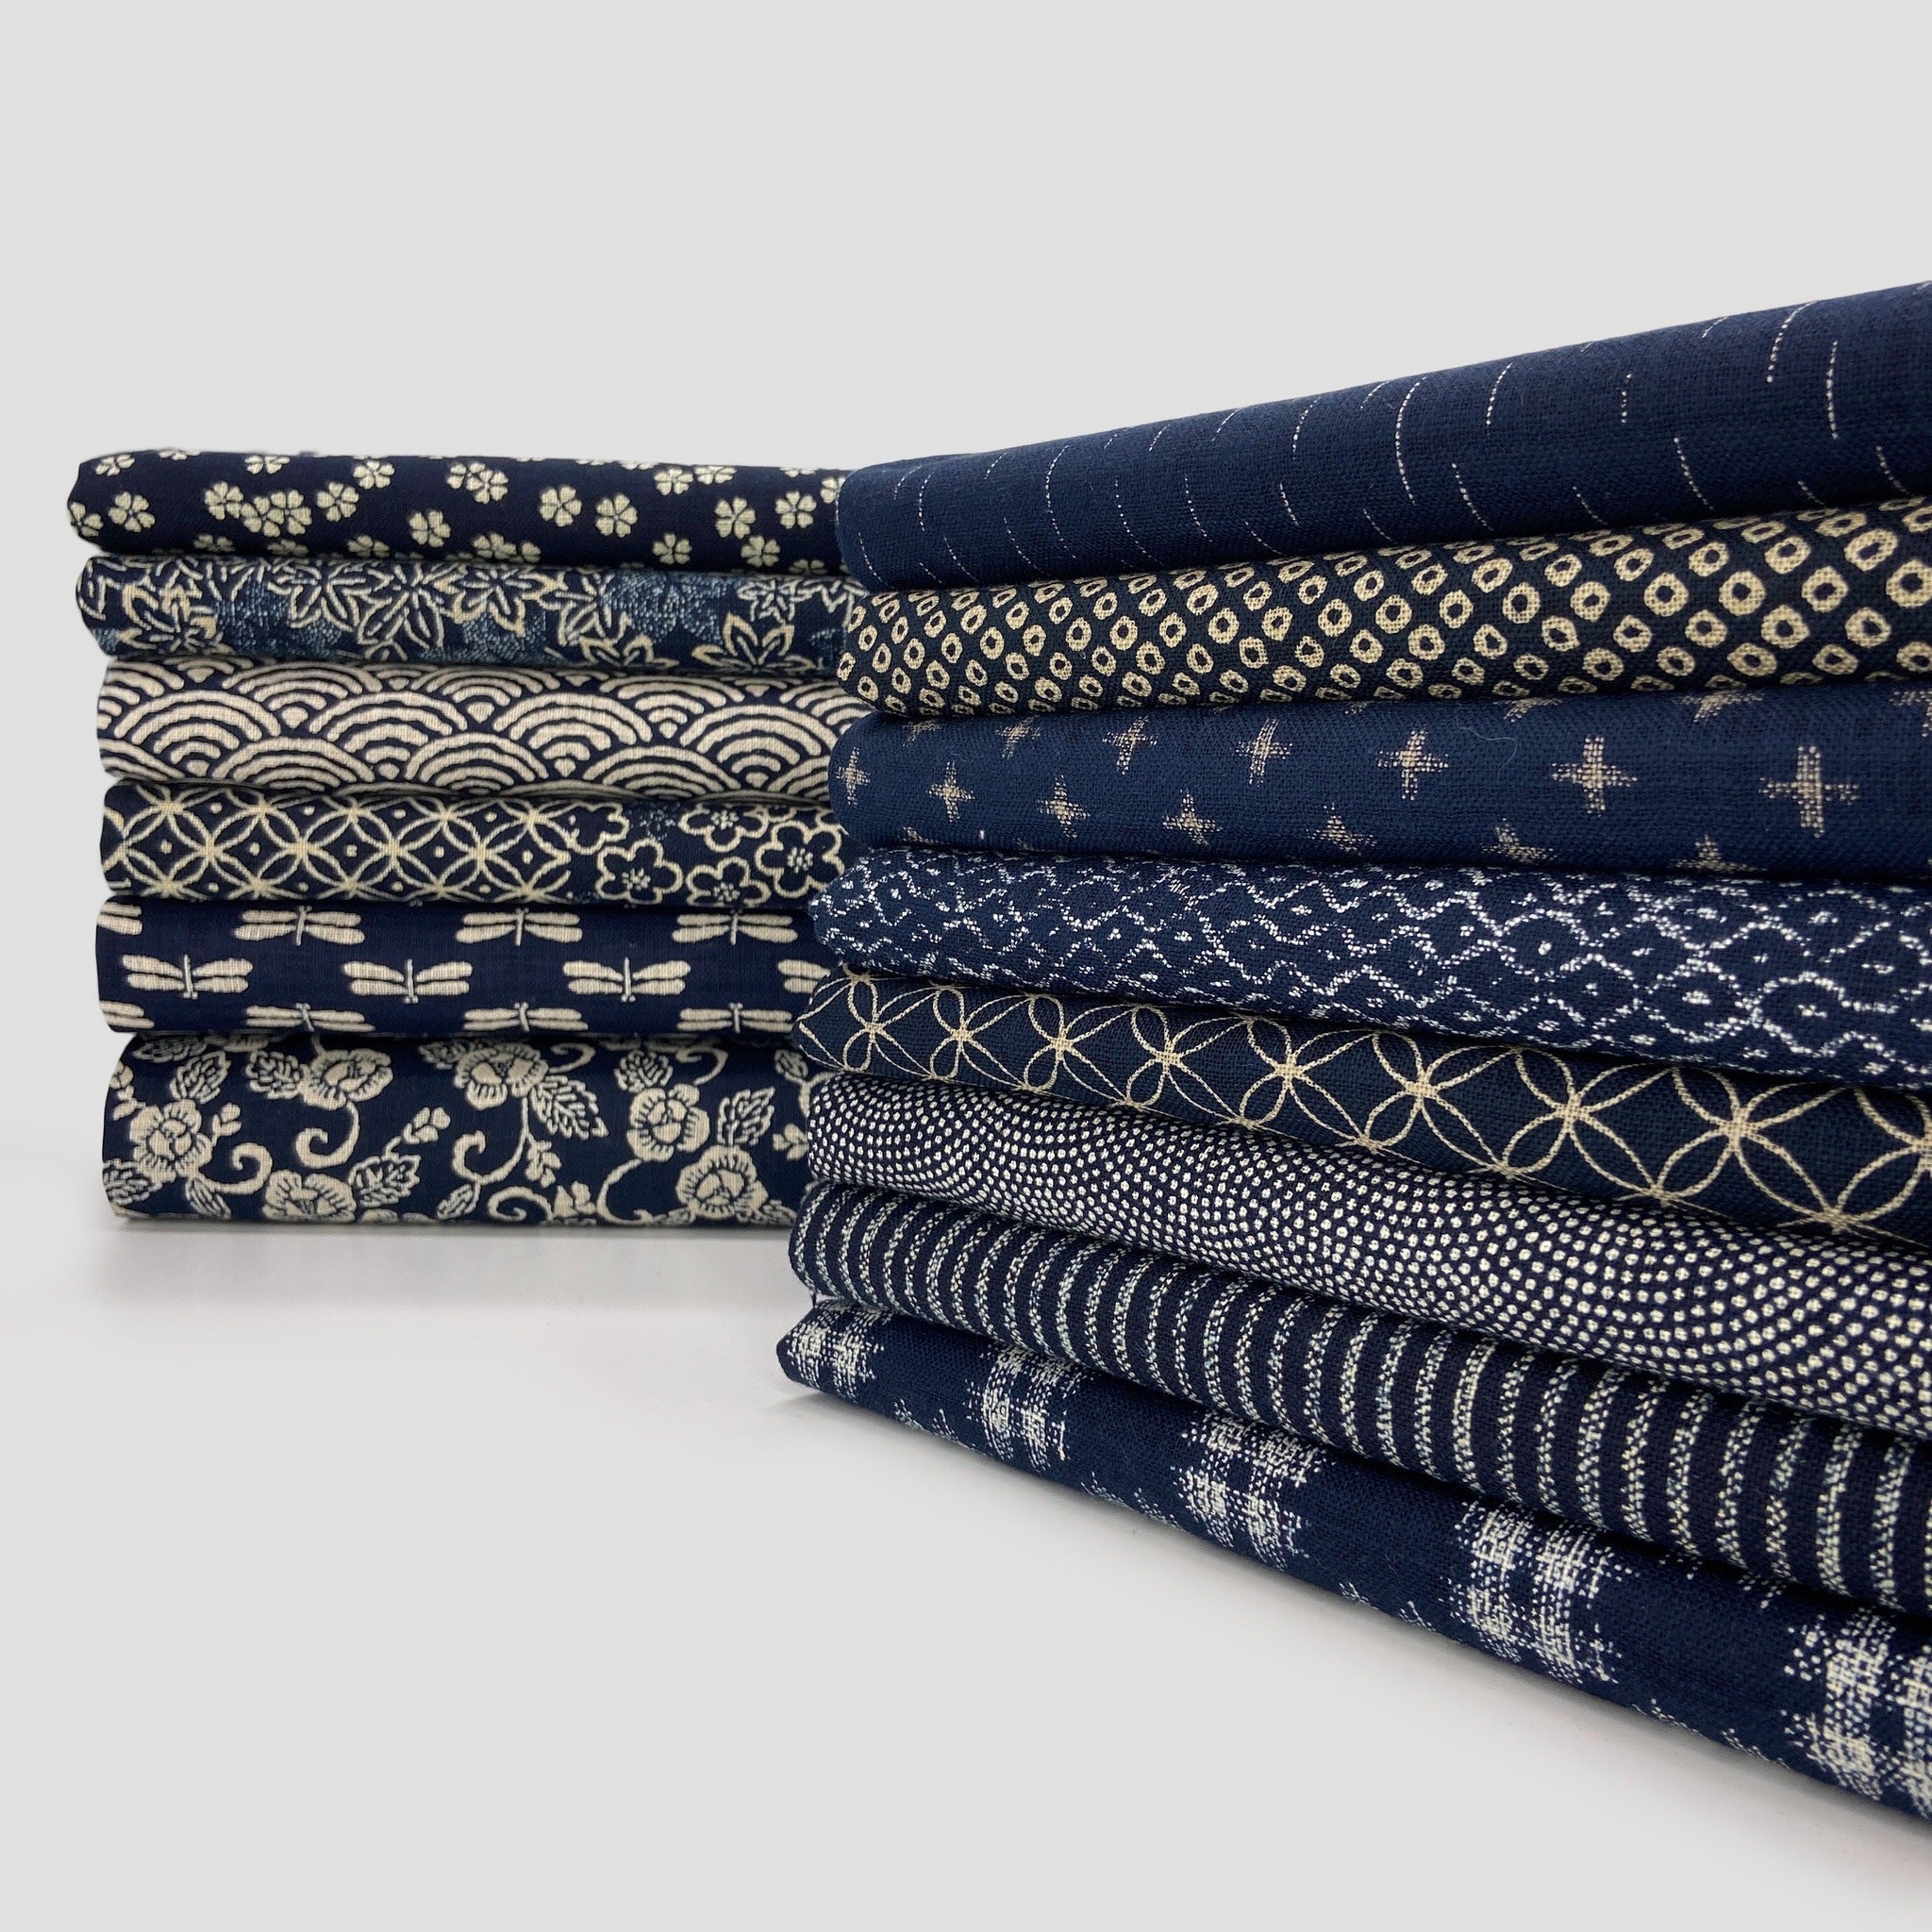 Japanese Cotton Uneven Yarns Sheeting Print - Indigo Stripes